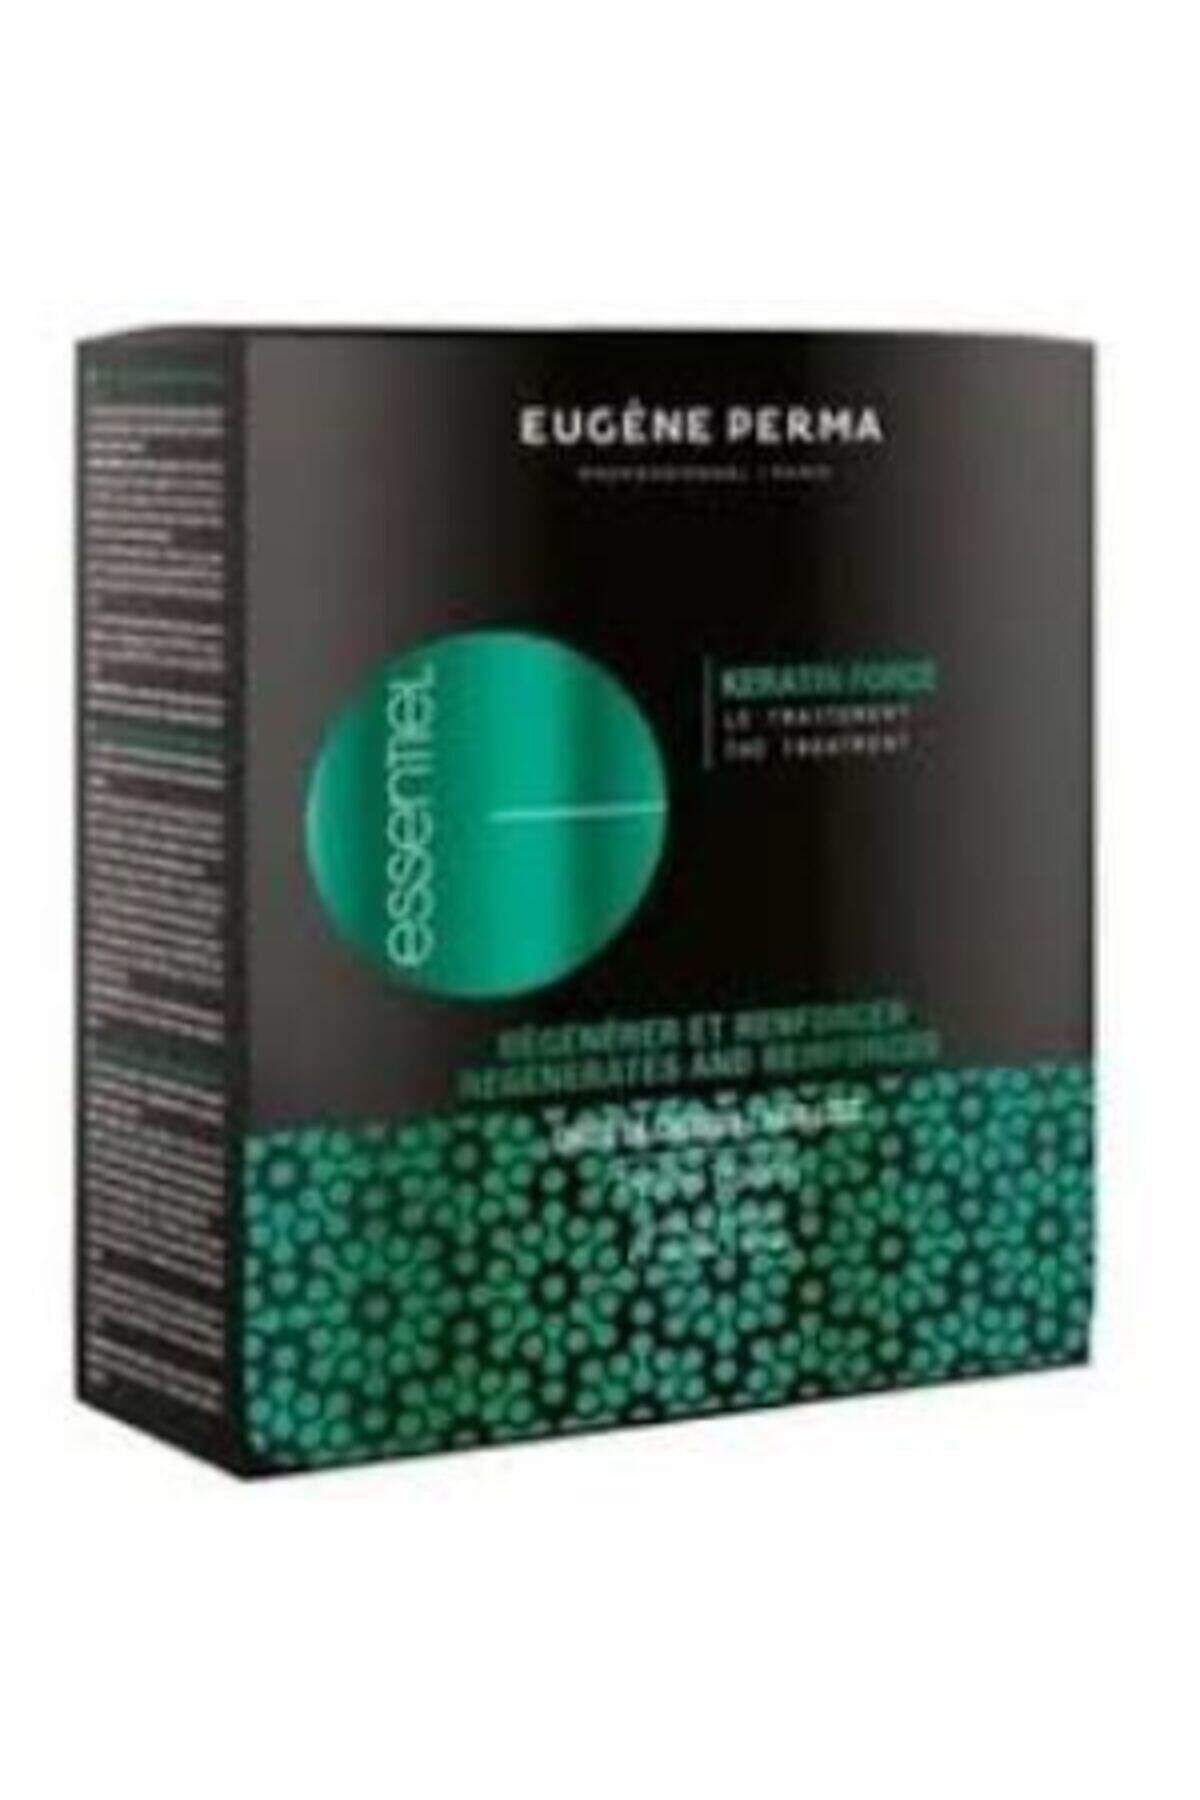 Eugene Perma Essentiel Keratin Dökülme Karşıtı Tonik 12x3.5ml